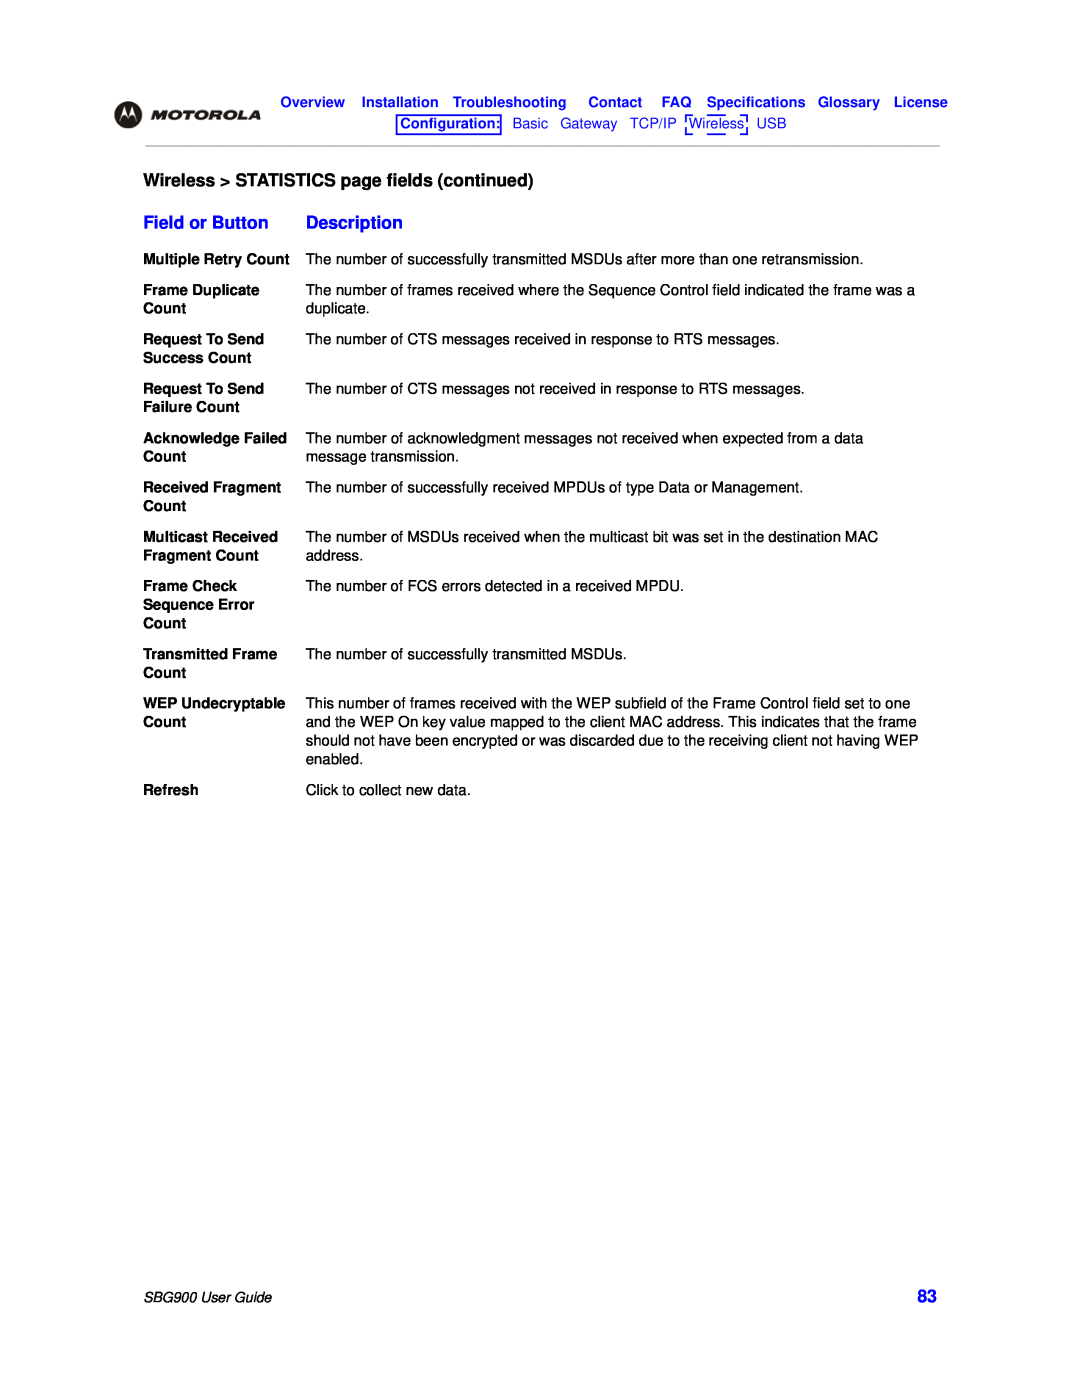 Motorola manual Wireless STATISTICS page fields continued, Field or Button, Description, SBG900 User Guide 